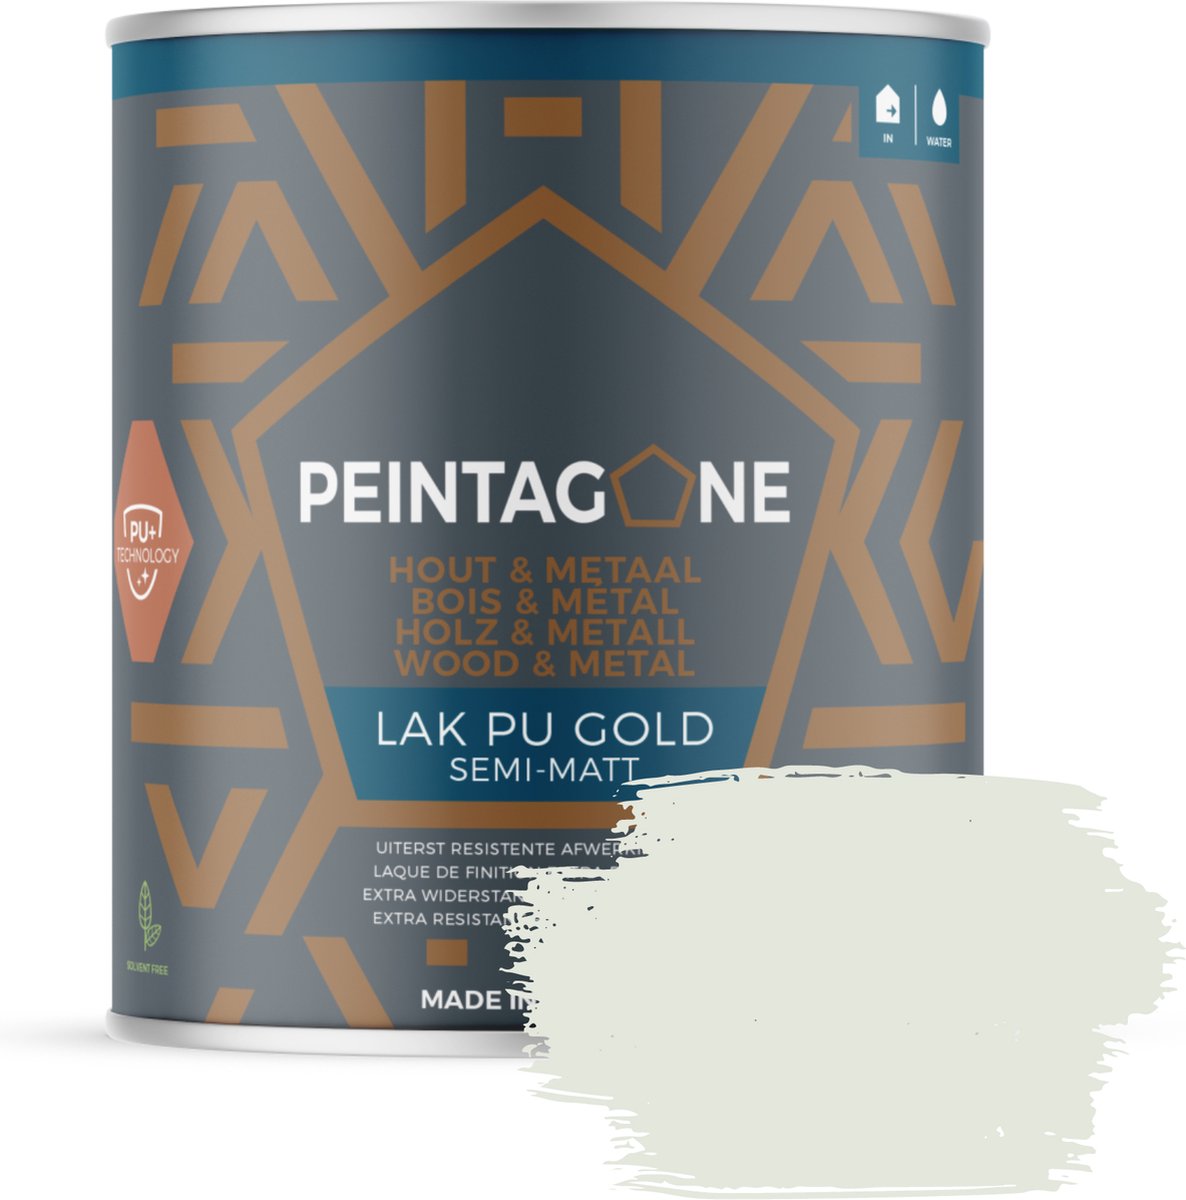 Peintagone - Lak PU Gold Semi-Mat - 2,5Liter - PE043 Monday